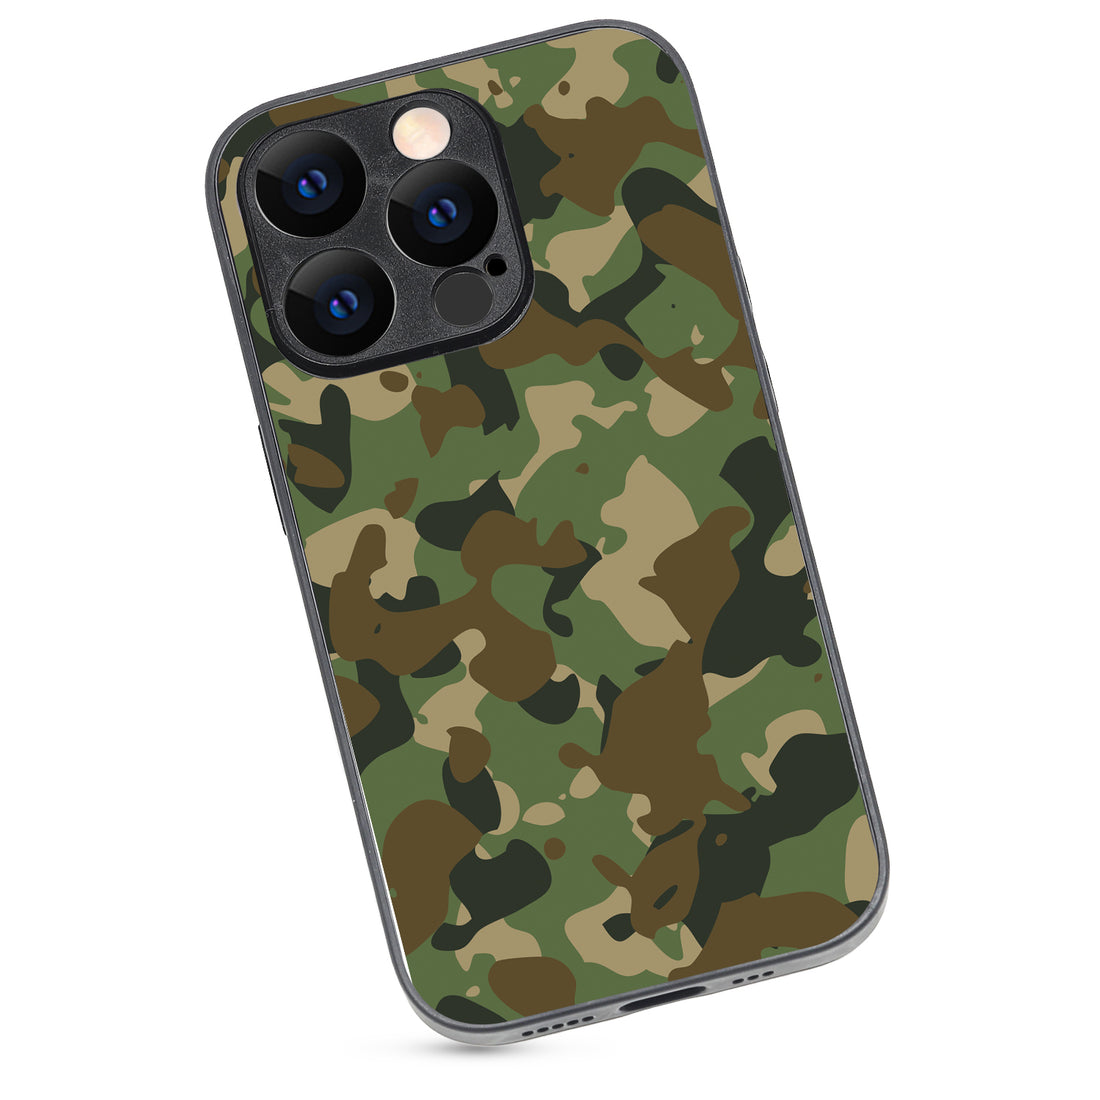 Camouflage Design iPhone 14 Pro Case